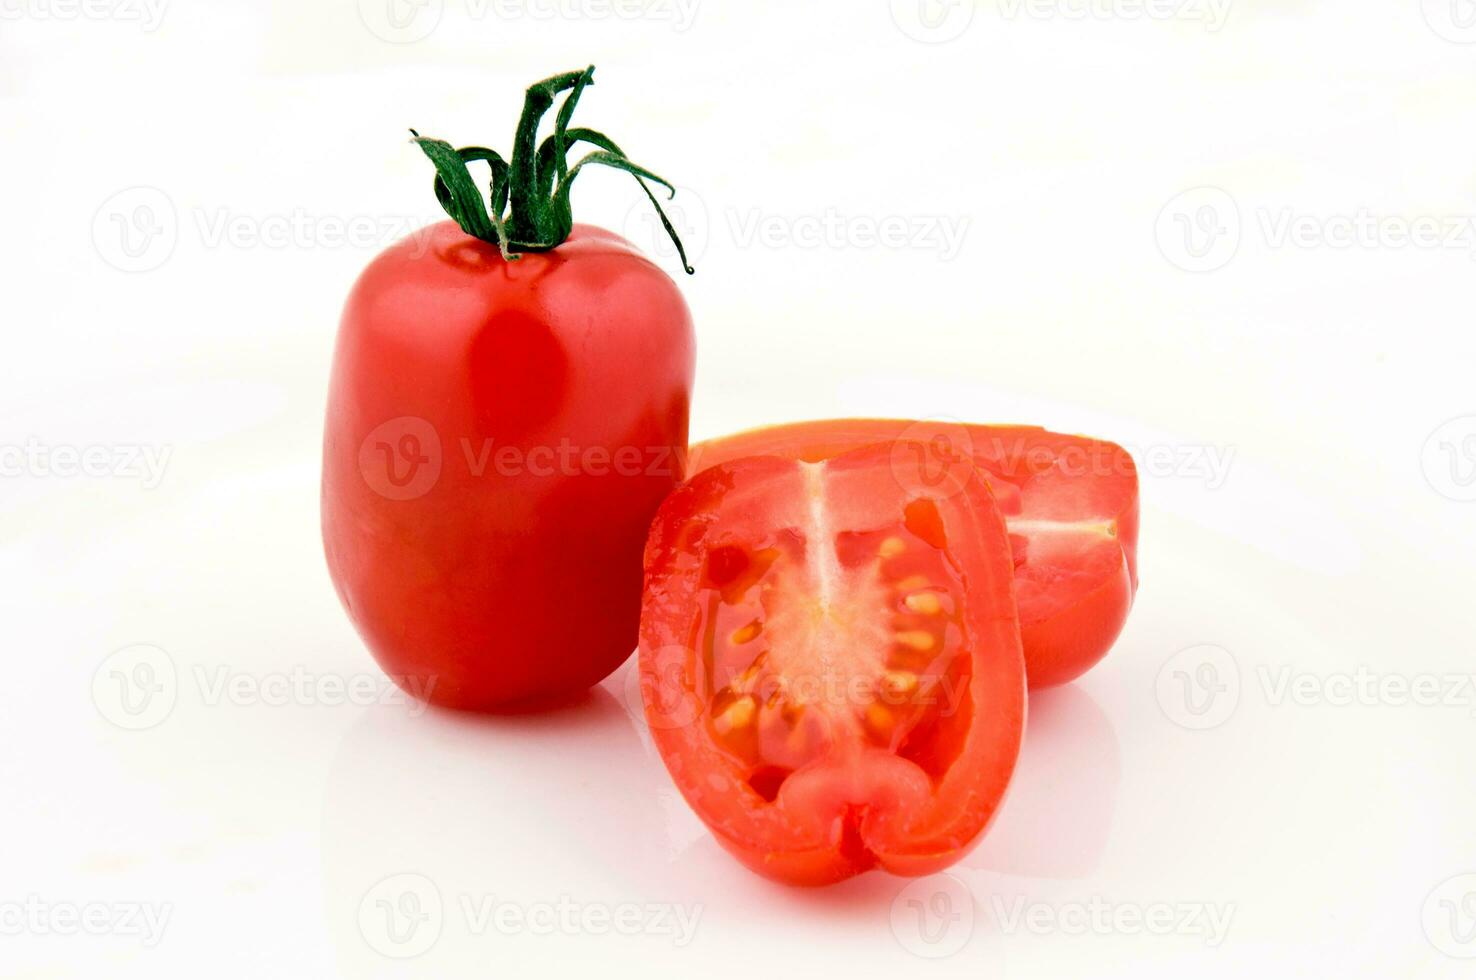 isolado cortado tomate foto